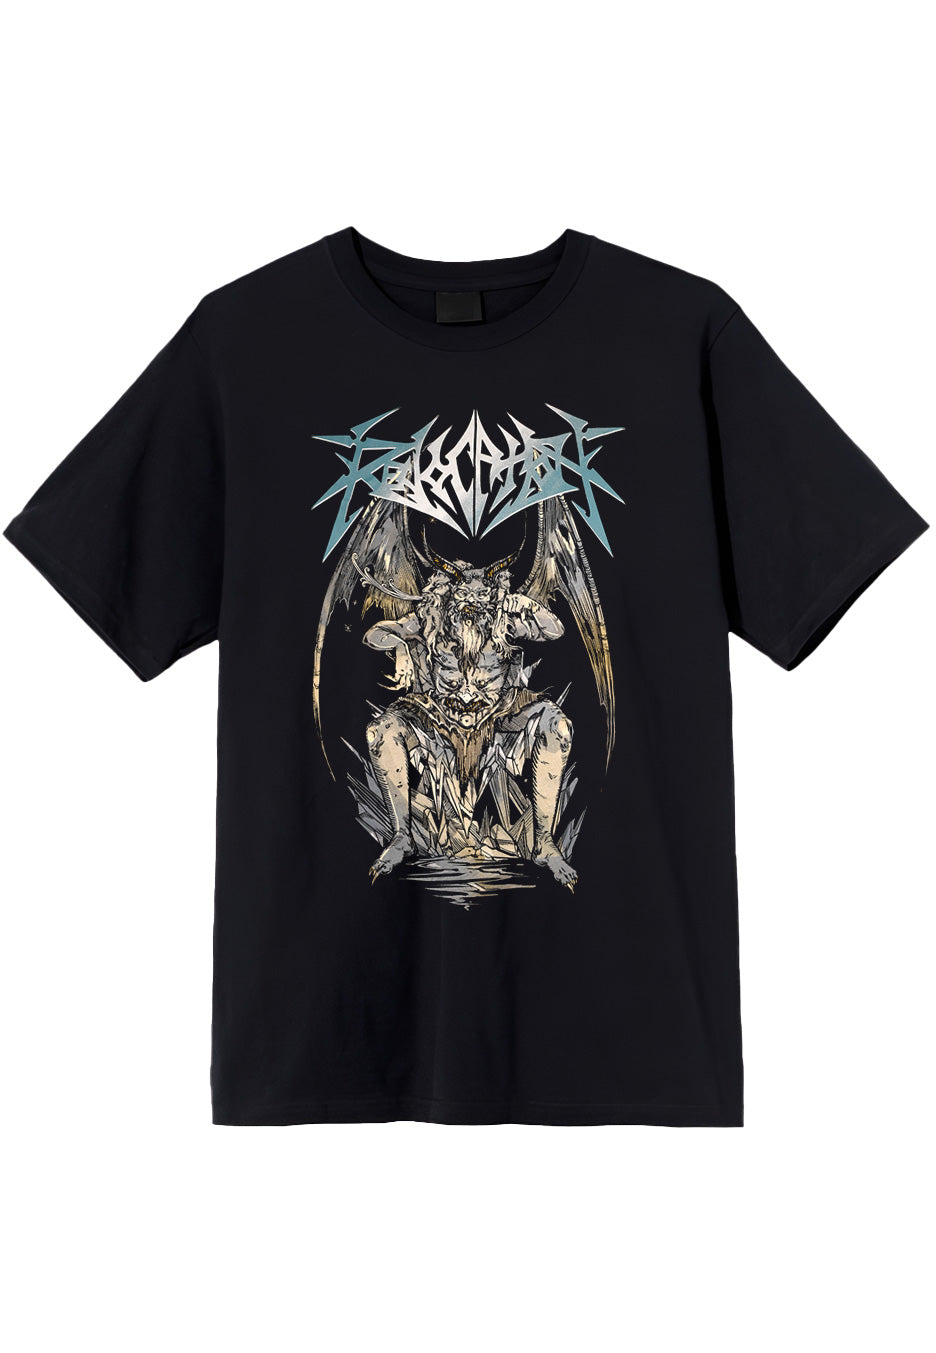 Revocation - 9th Chasm - T-Shirt